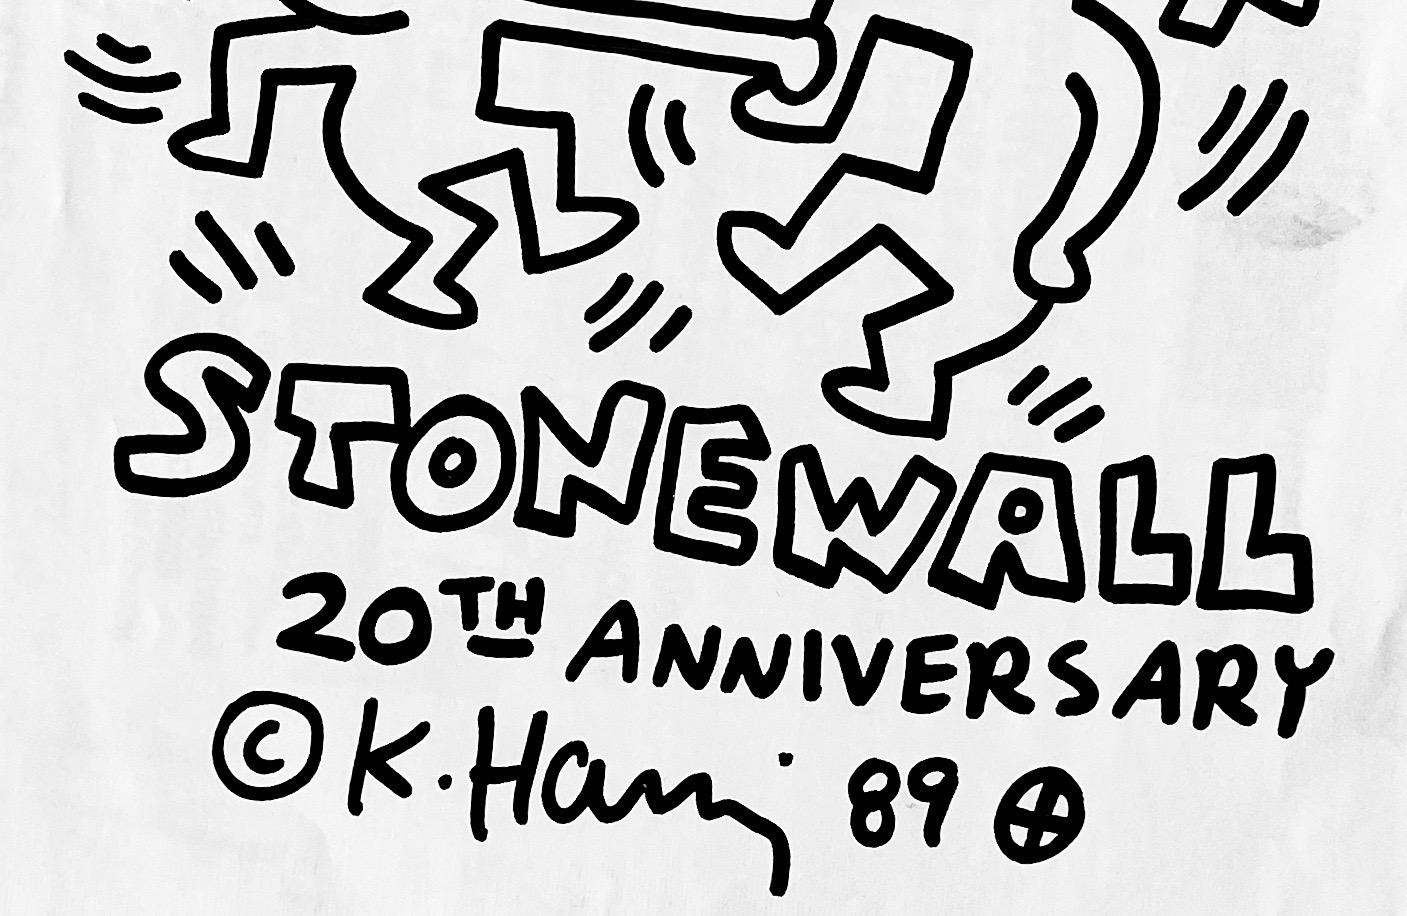 Keith Haring Stonewall 20th Anniversary poster  1